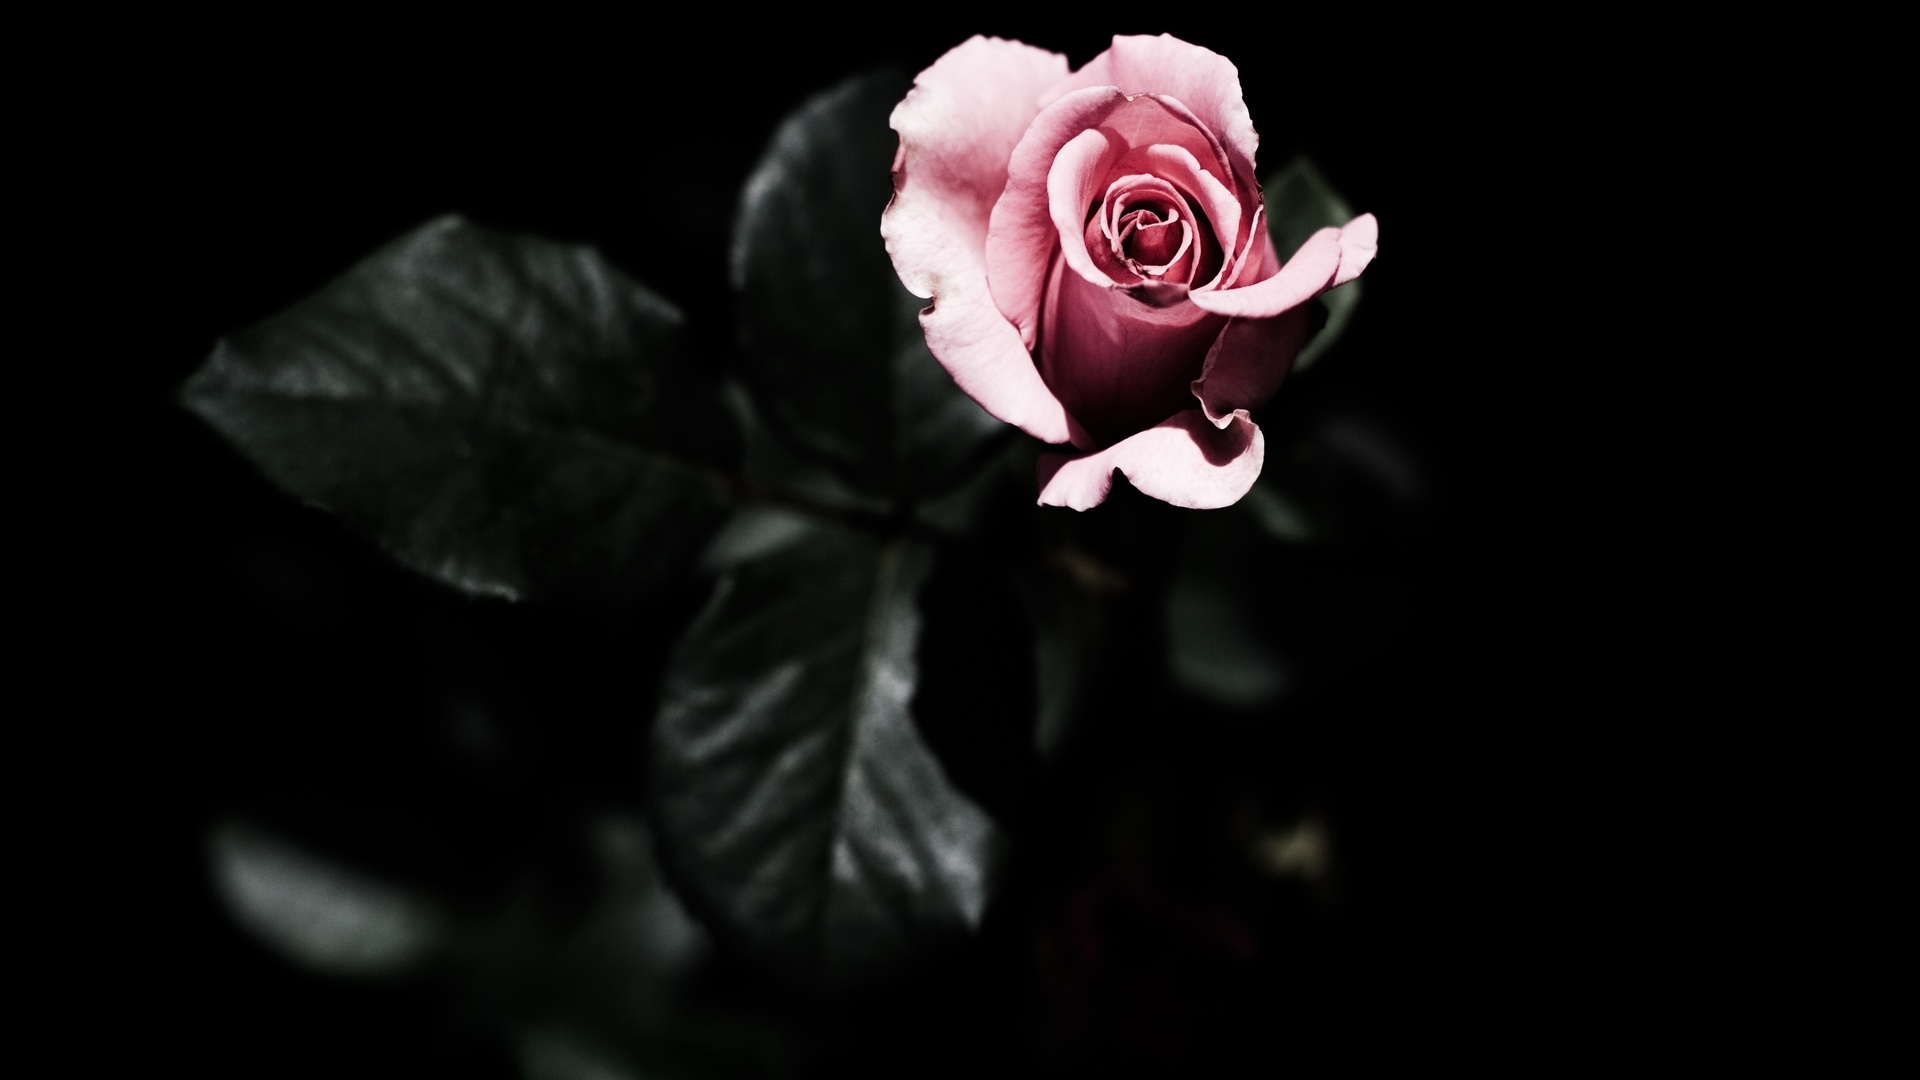 fonds d'écran rose, rose, feuille, fond noir, fleurs, photo x